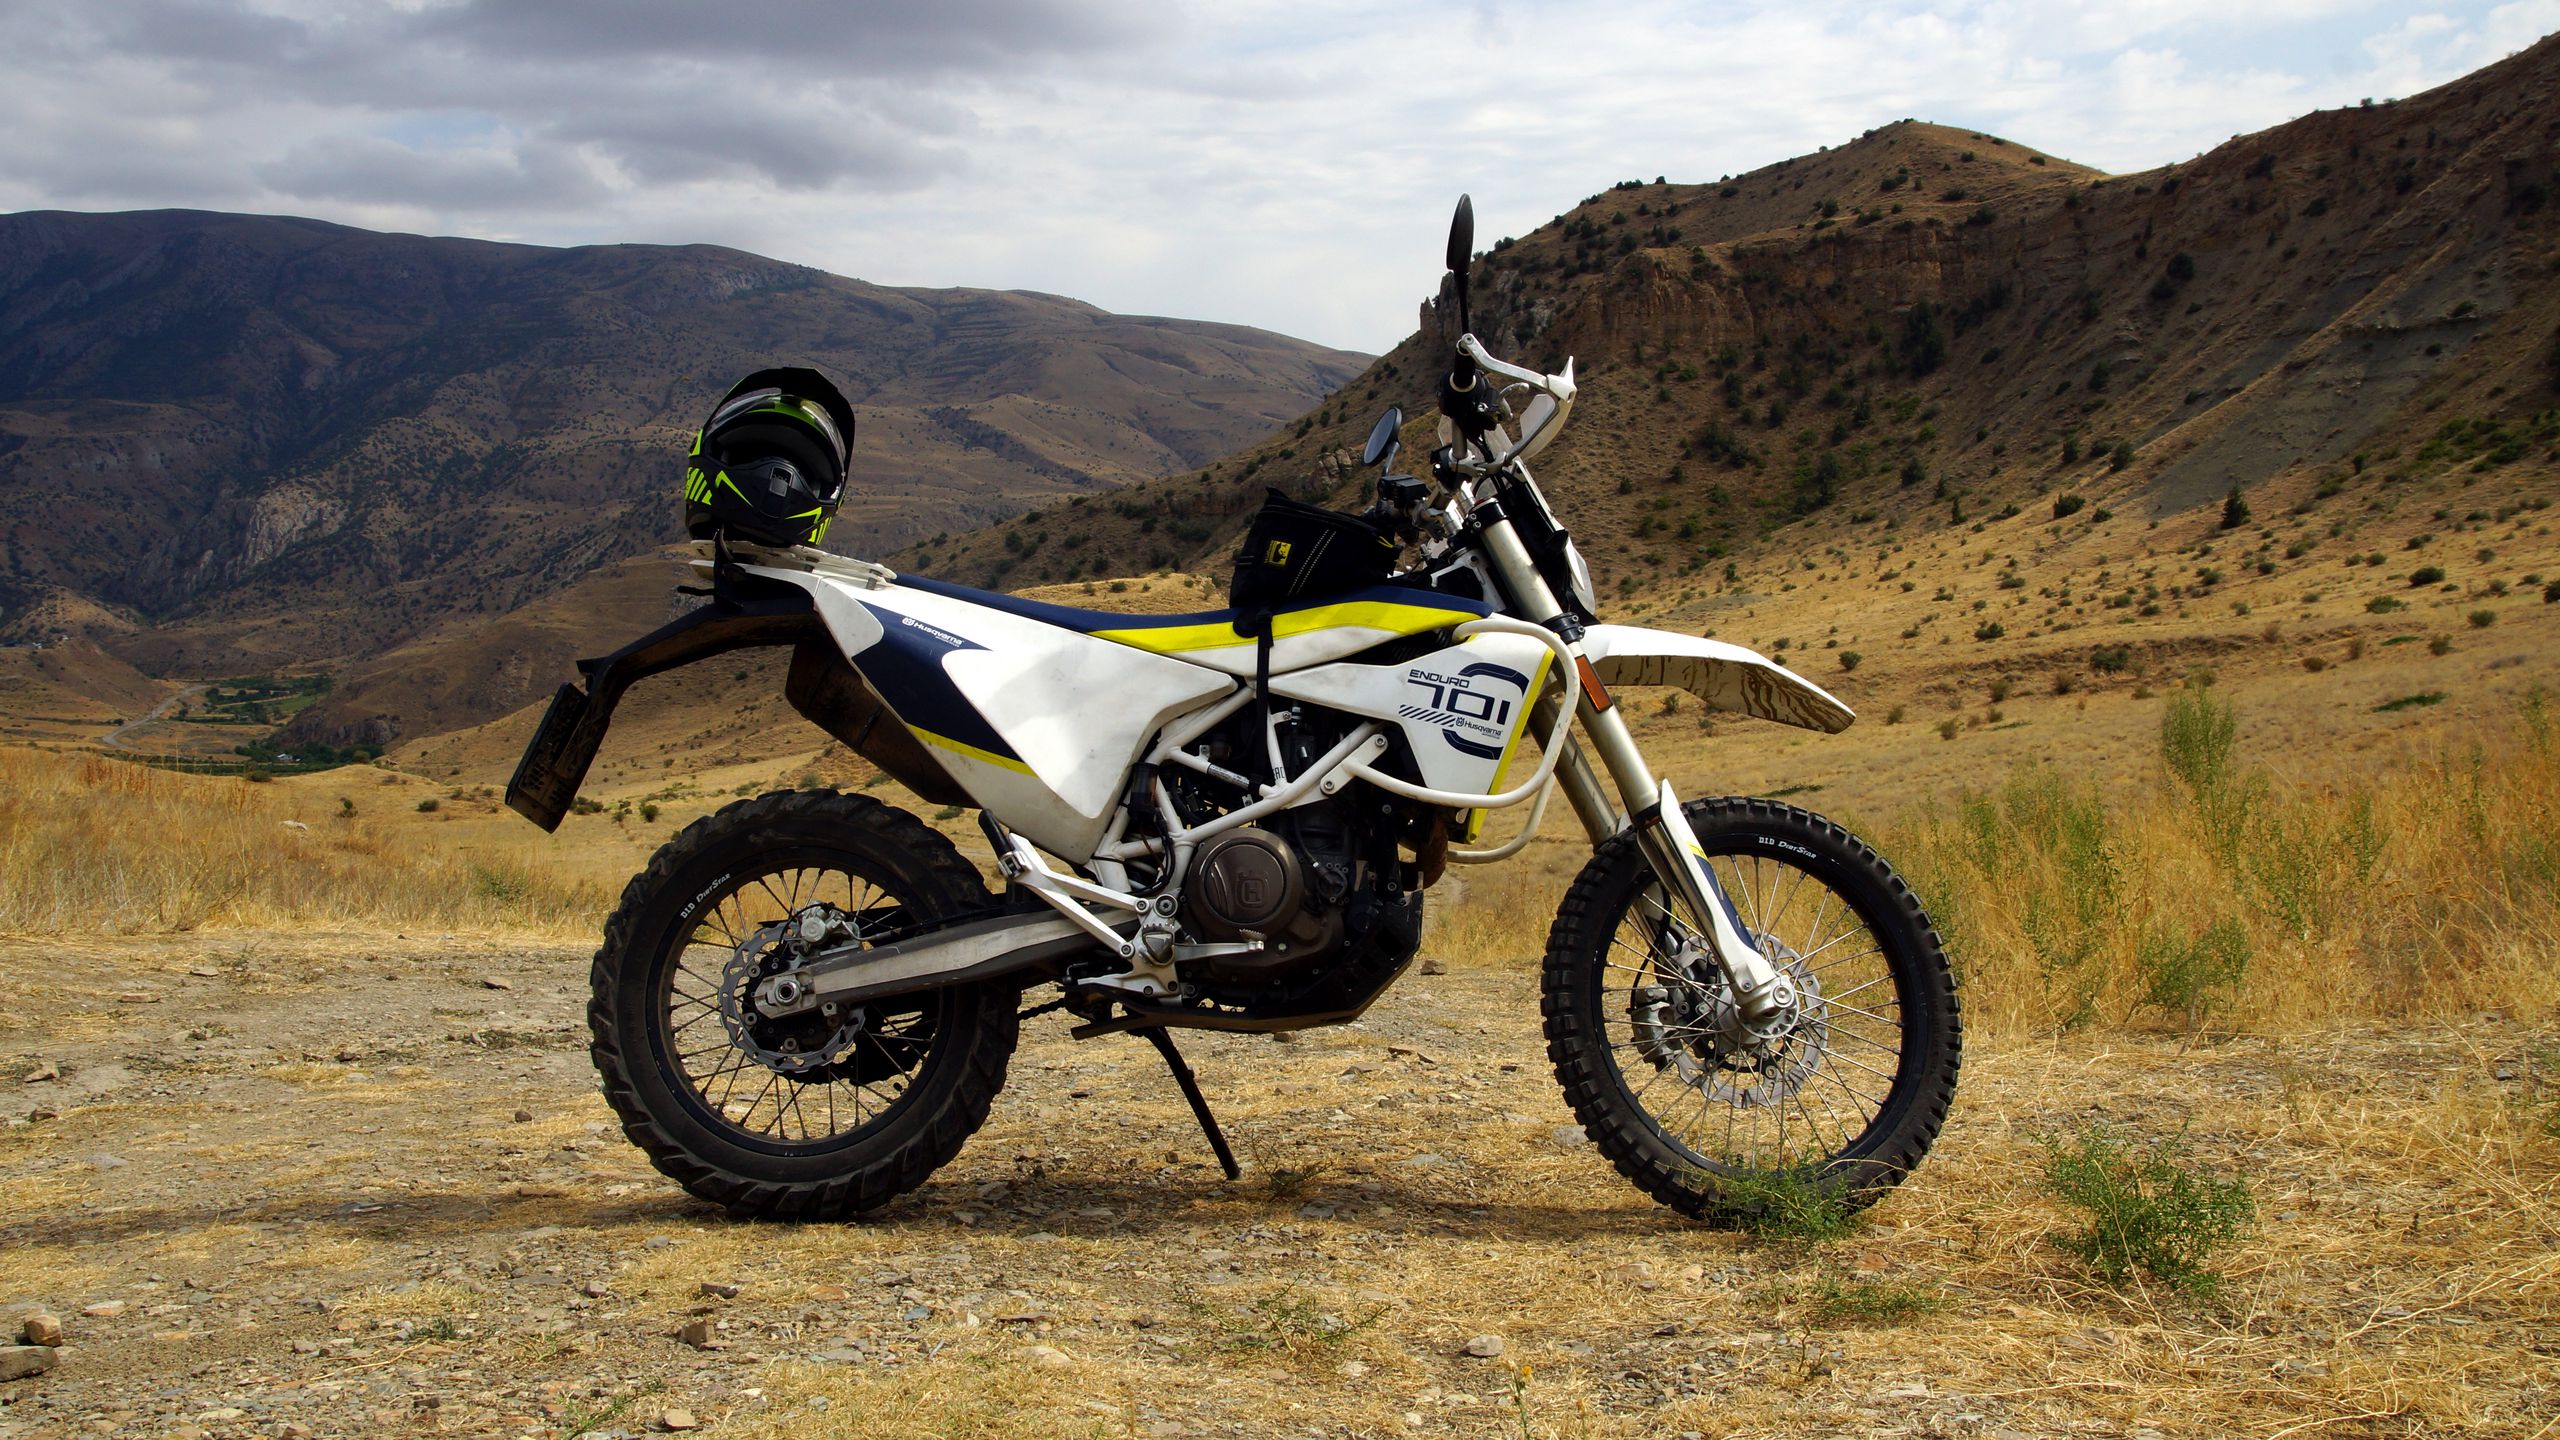 2560x1440 Wallpaper motorcycle, bike, mountains, nature